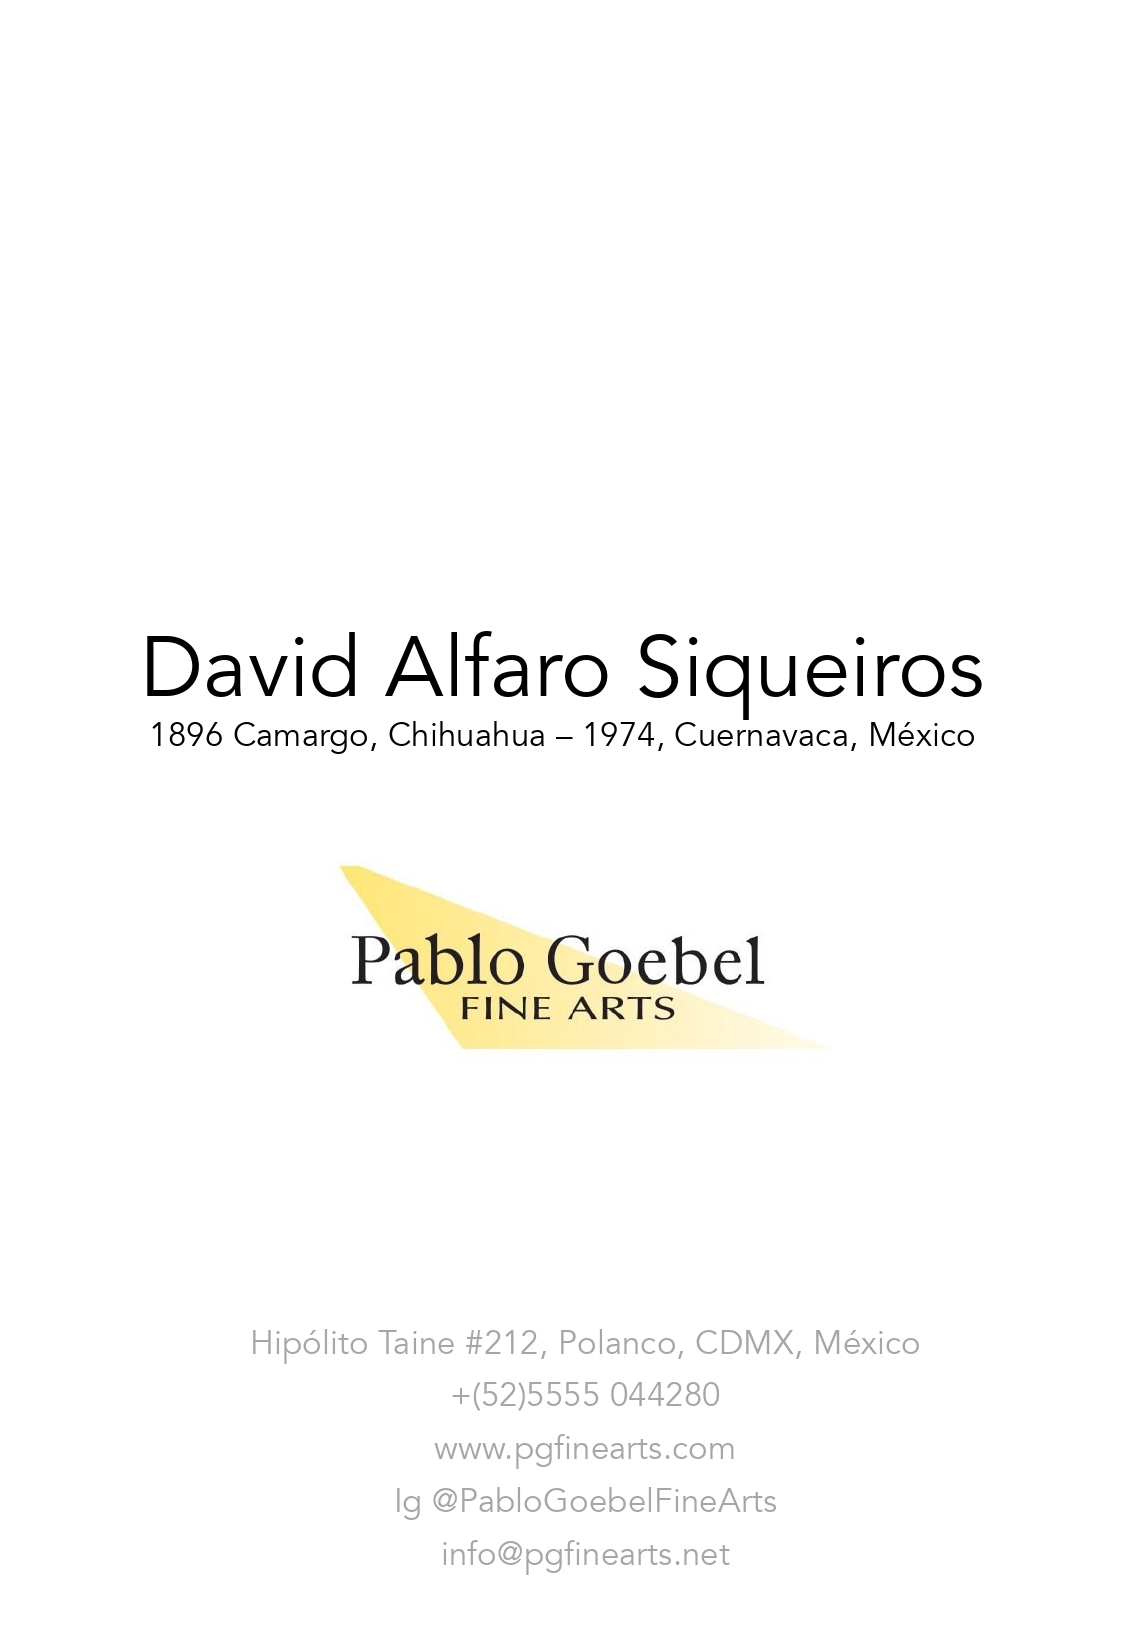 David Alfaro Siqueiros 1896 Camargo, Chihuahua - 1974, Cuernavaca, Morelos